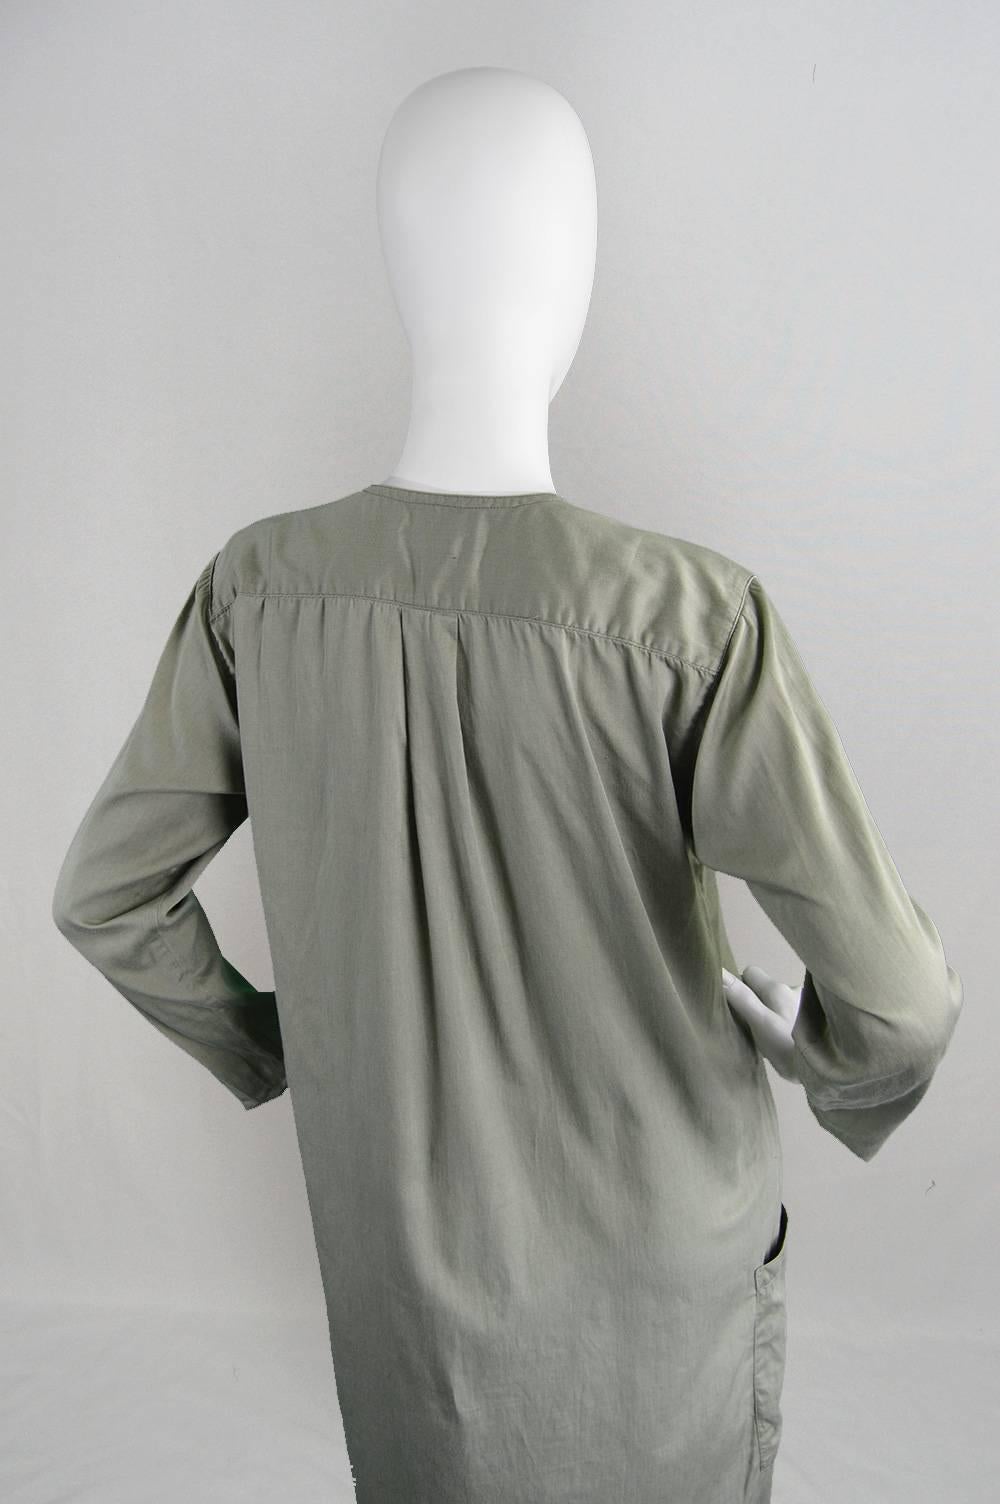 Kenzo Jap 1970s Vintage Minimalist Cotton Shift Dress with Oversized Pockets For Sale 3